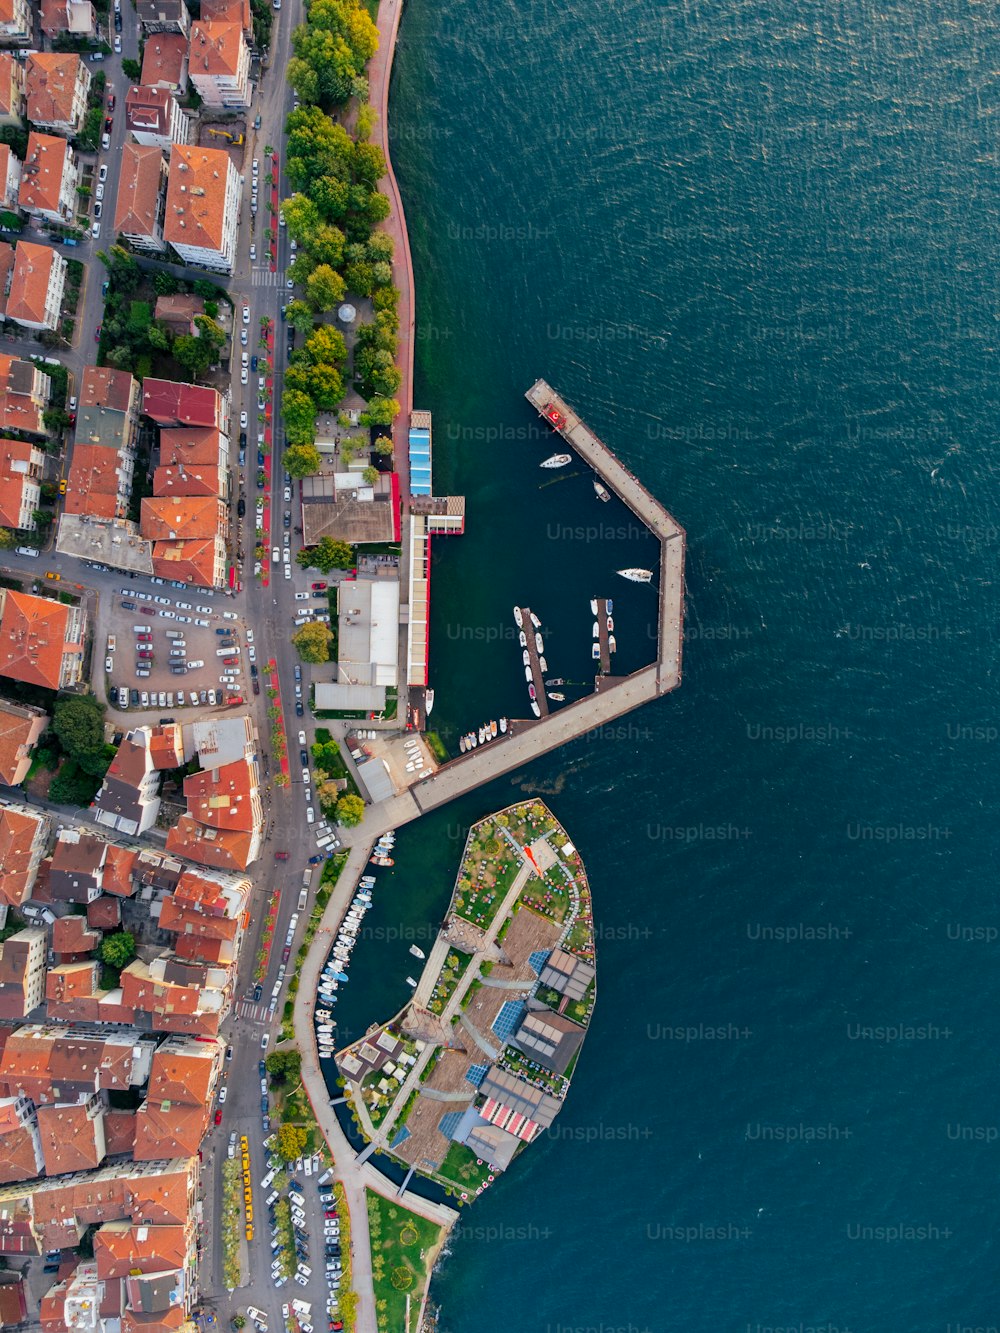 una veduta aerea di una città vicino all'acqua